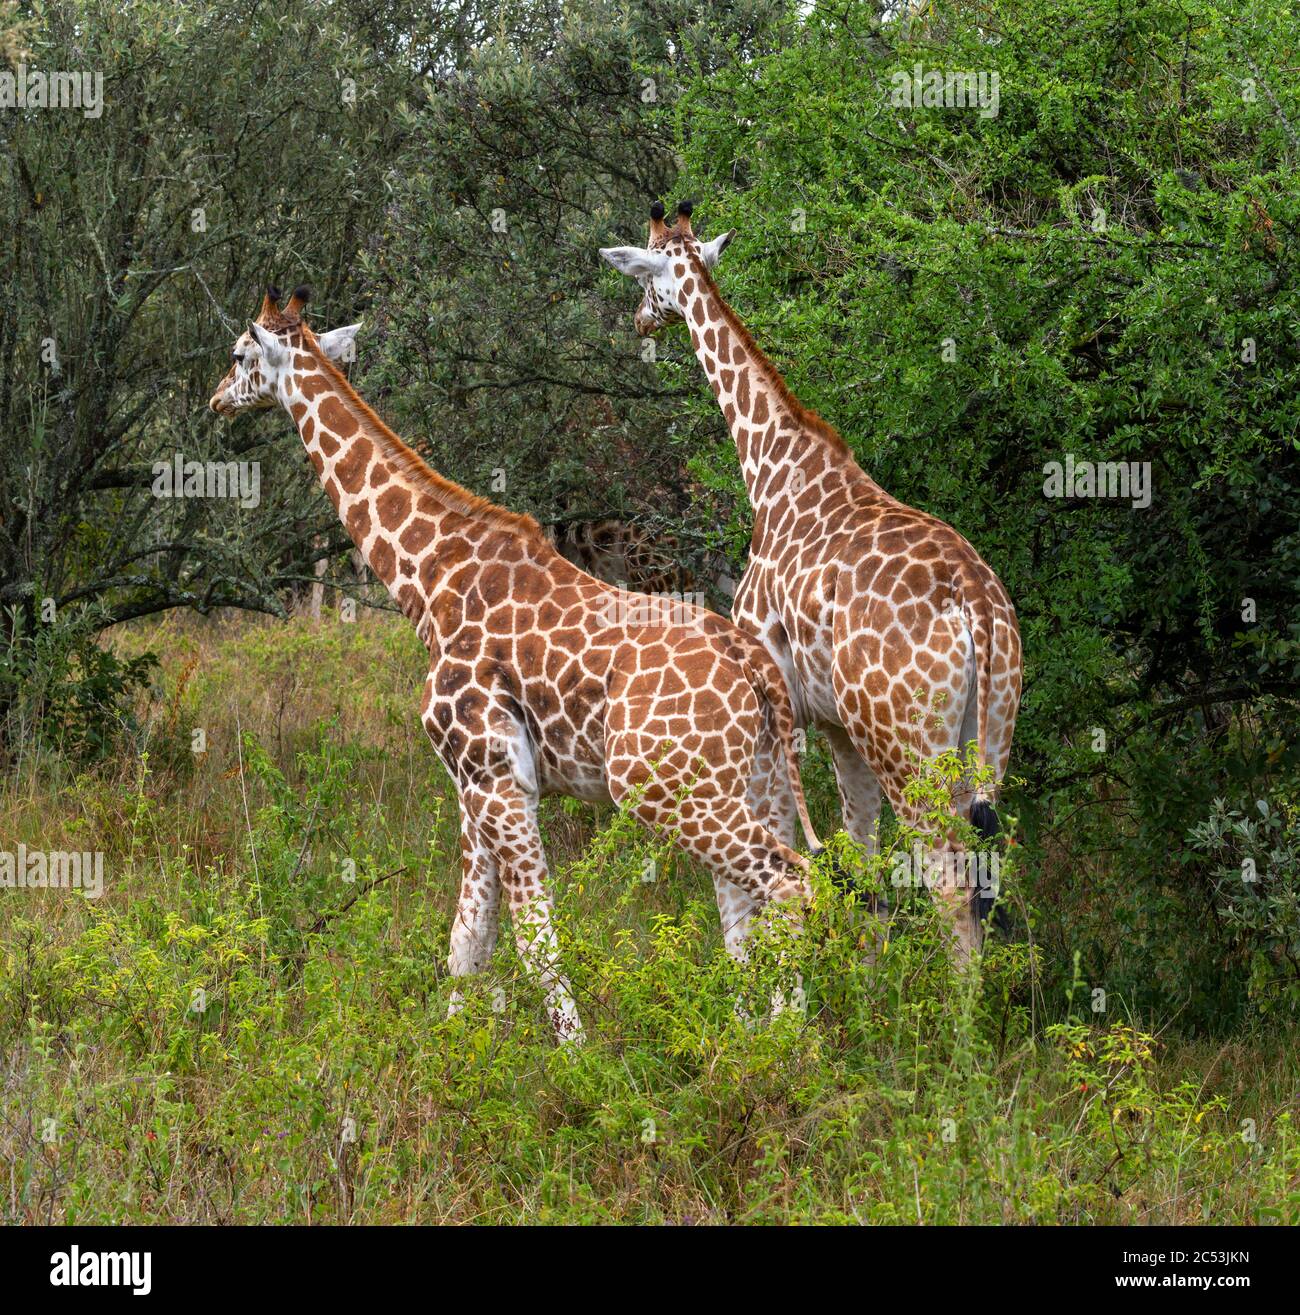 Paire de girafes de Rothschild (Giraffa camelopardalis rothschild), parc national du lac Nakuru, Kenya, Afrique Banque D'Images